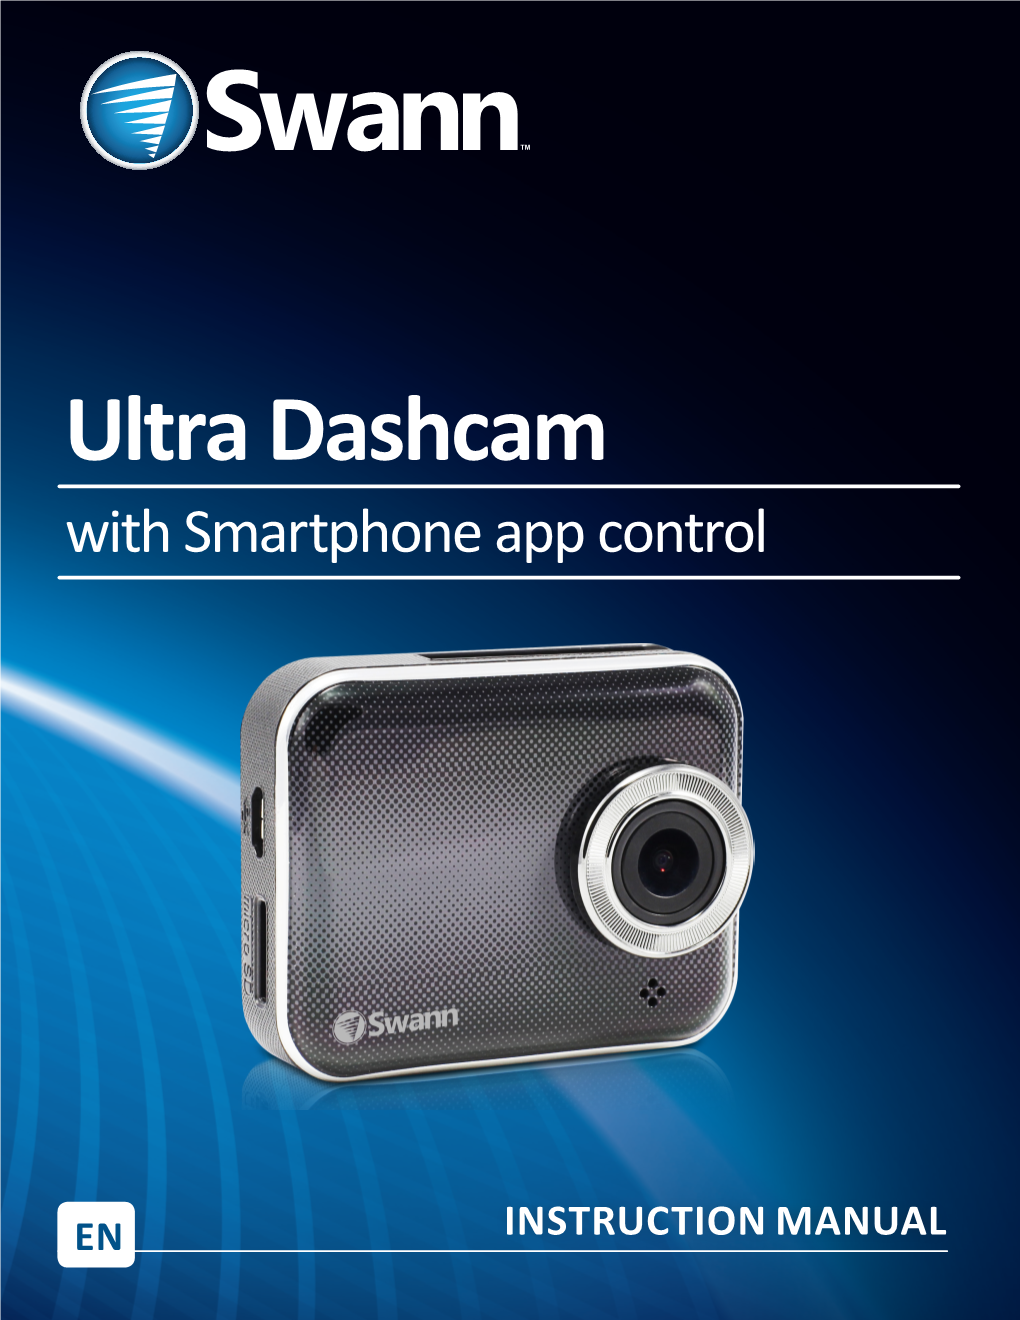 Ultra Dashcam with Smartphone App Control